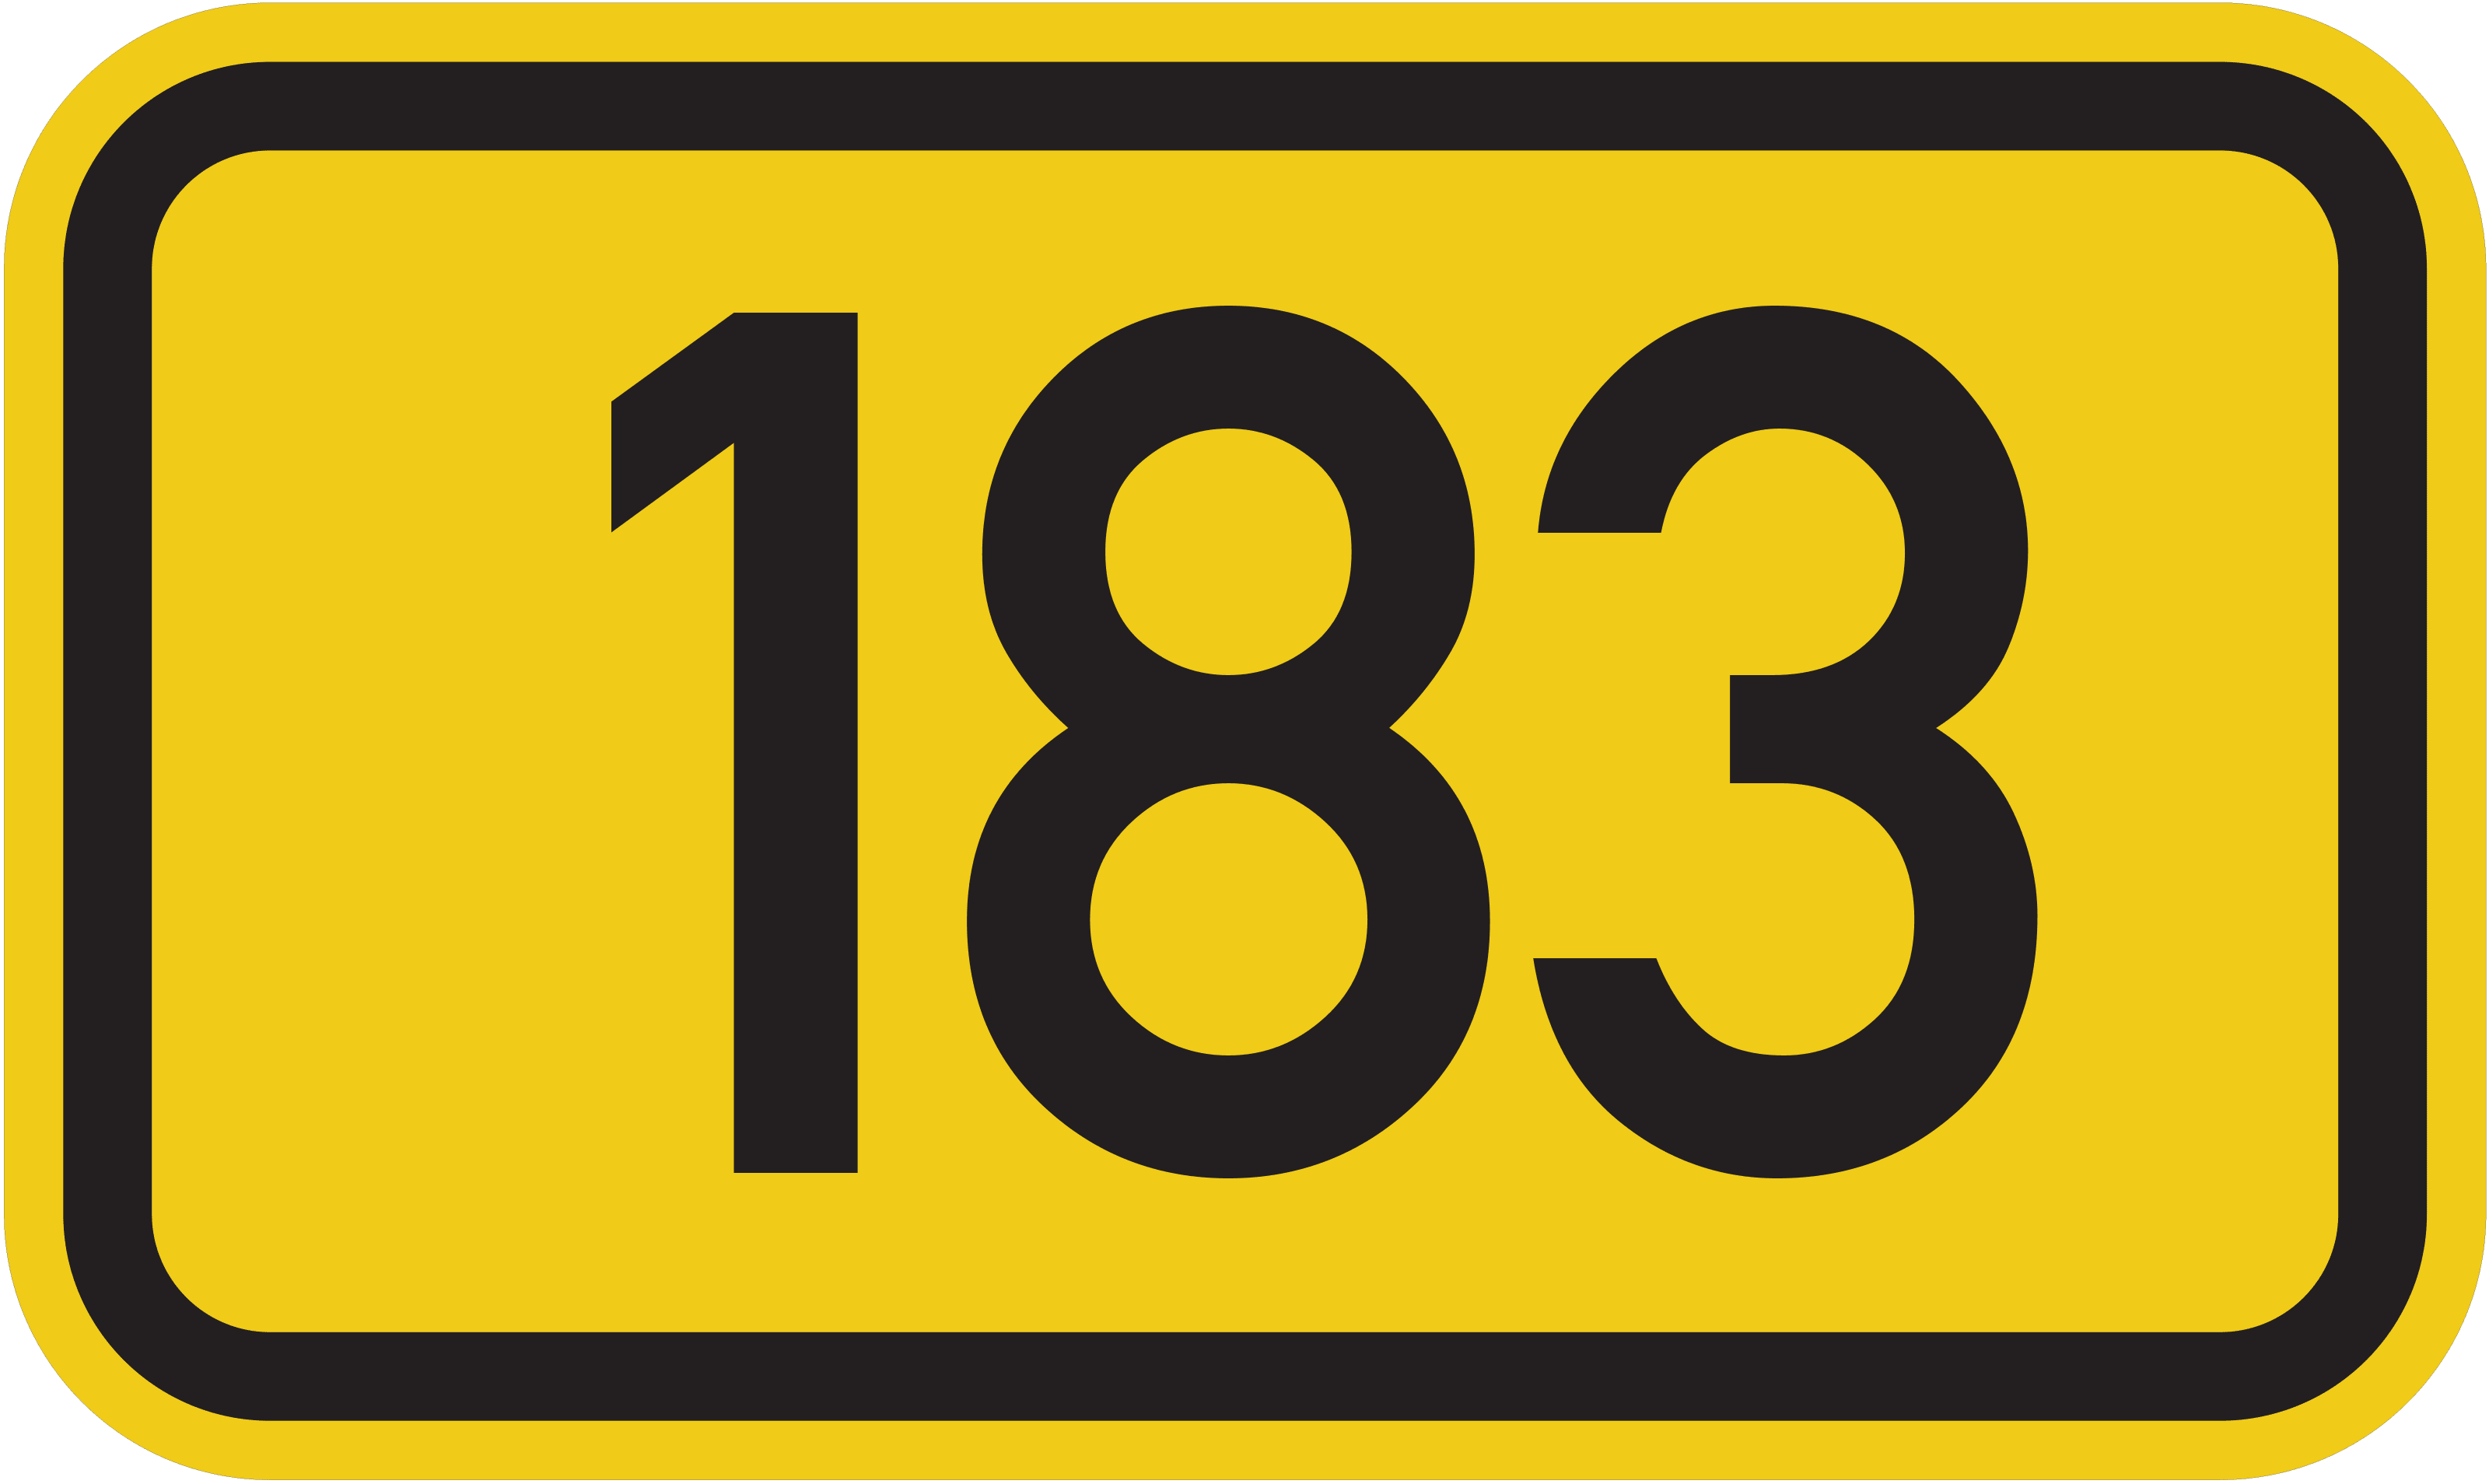 Straßenschild Bundesstraße 183